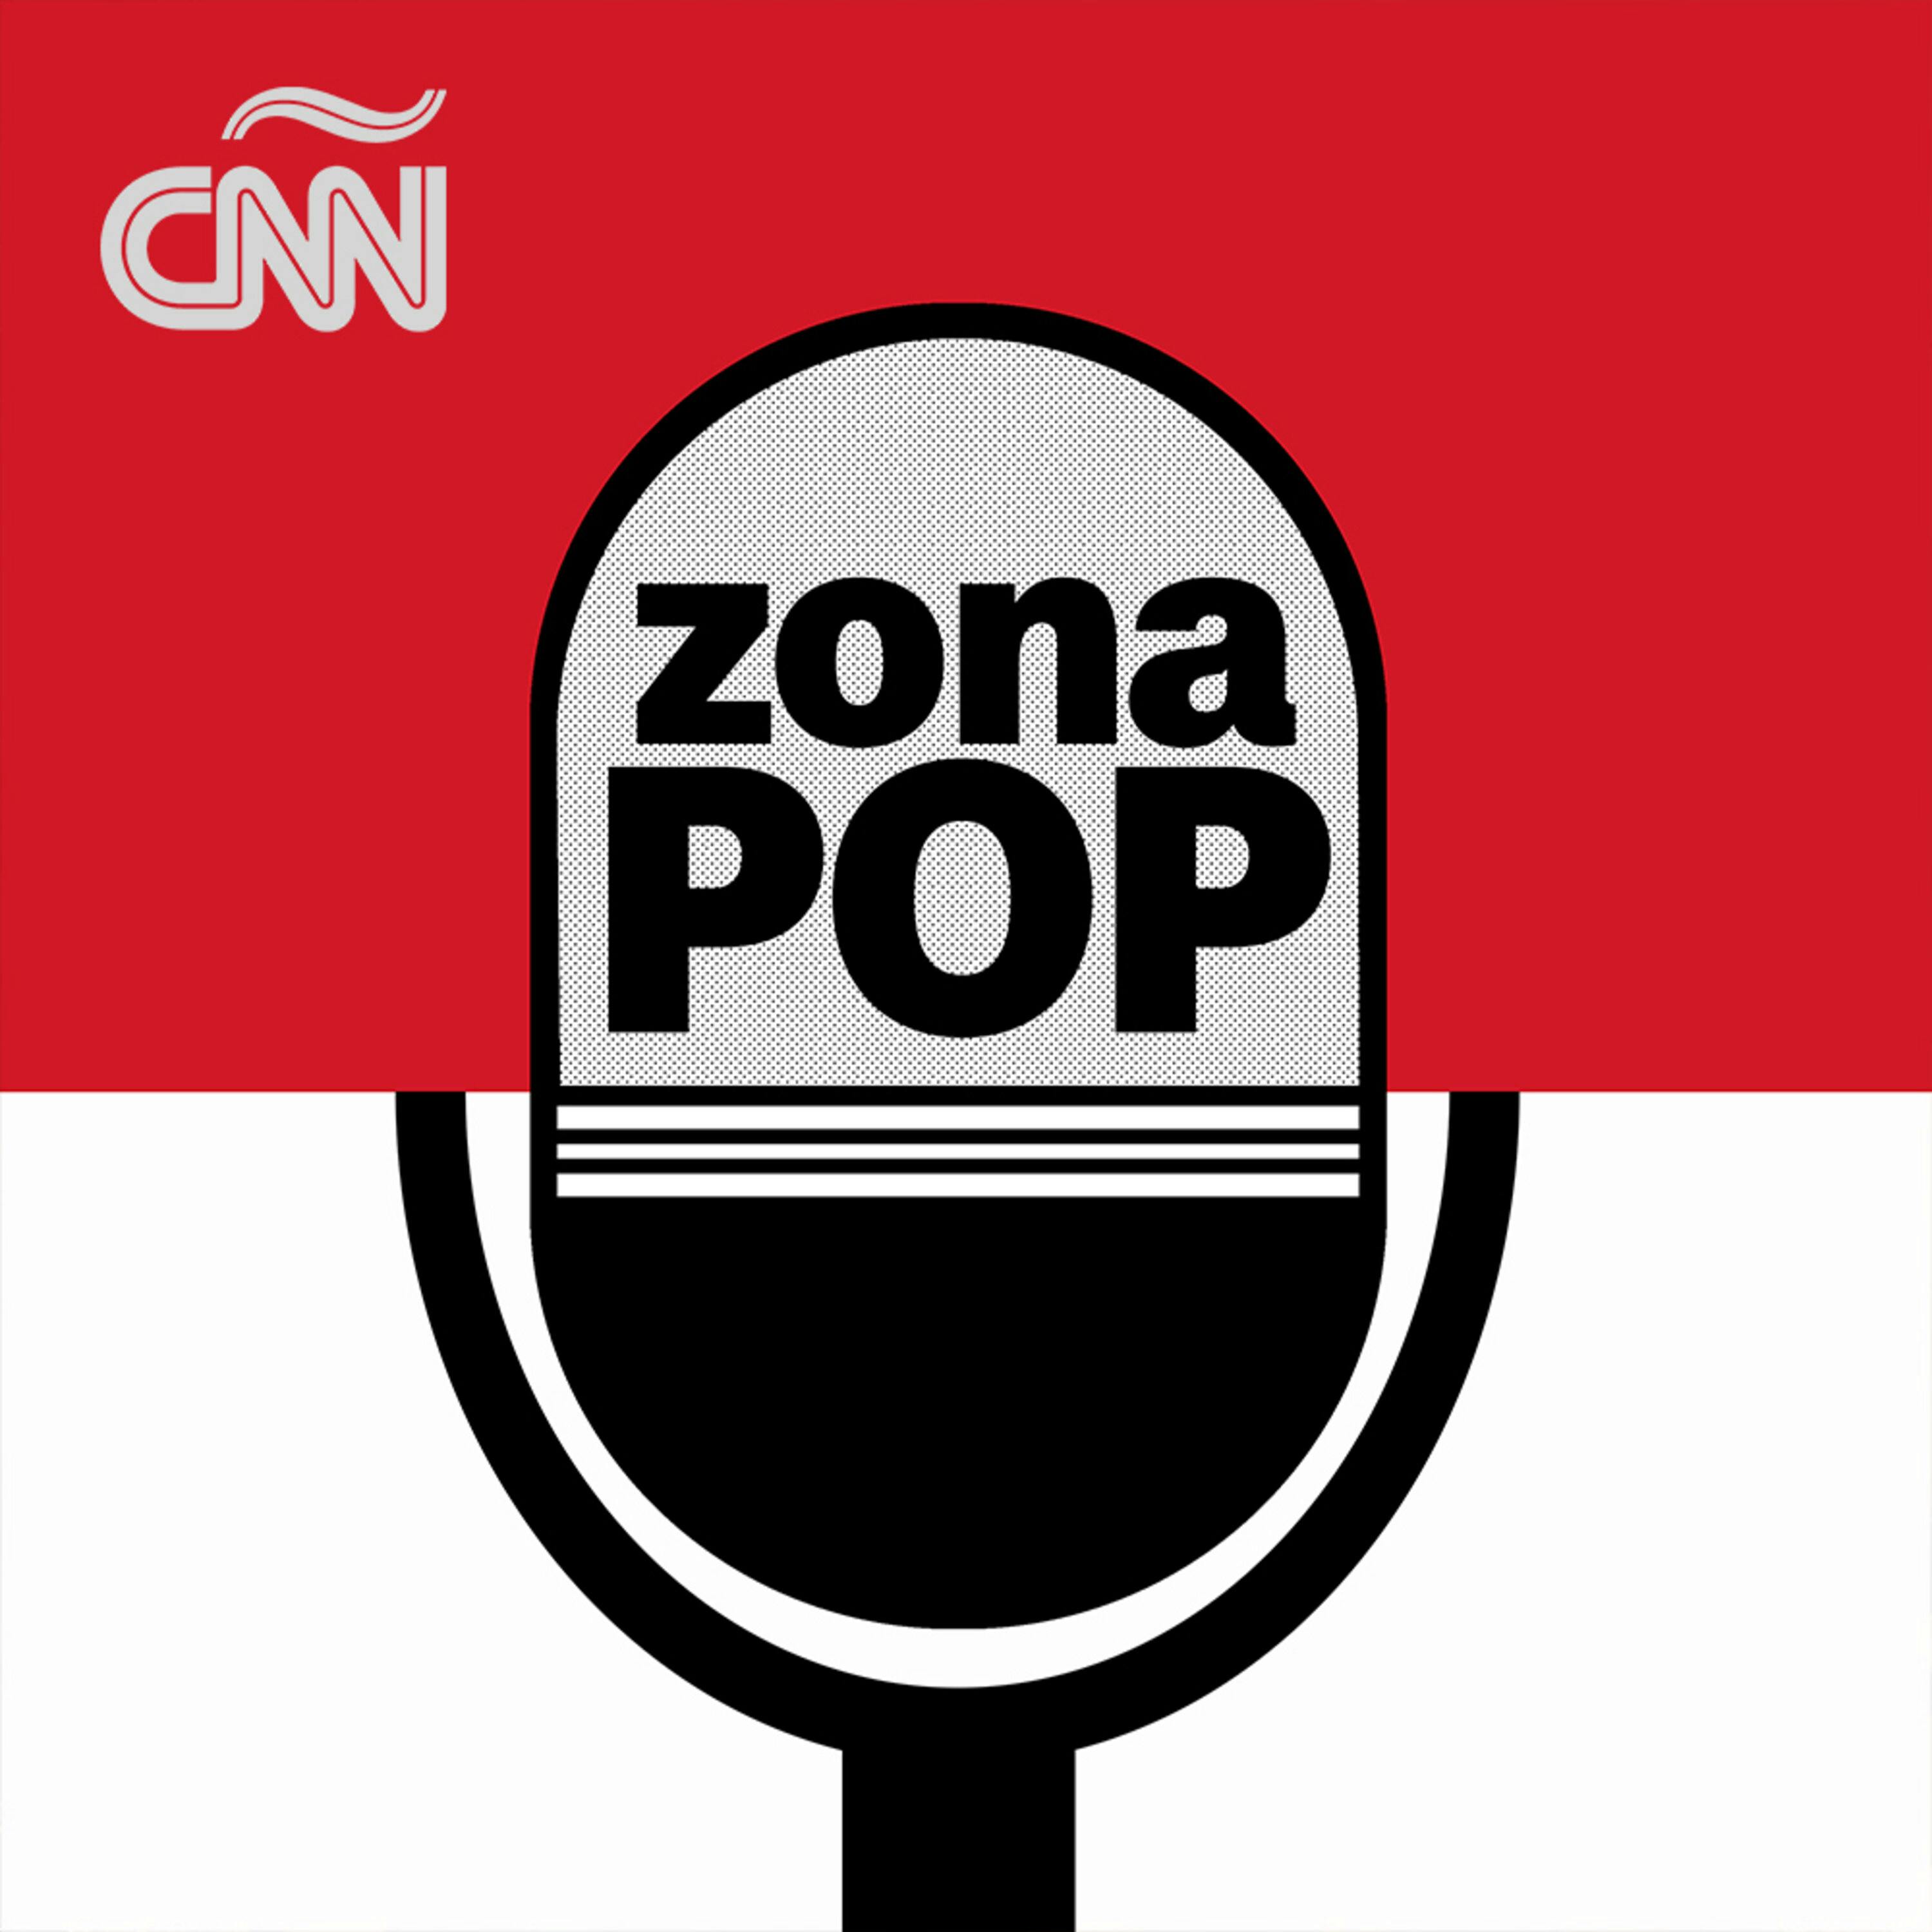 Zona Pop CNN podcast show image